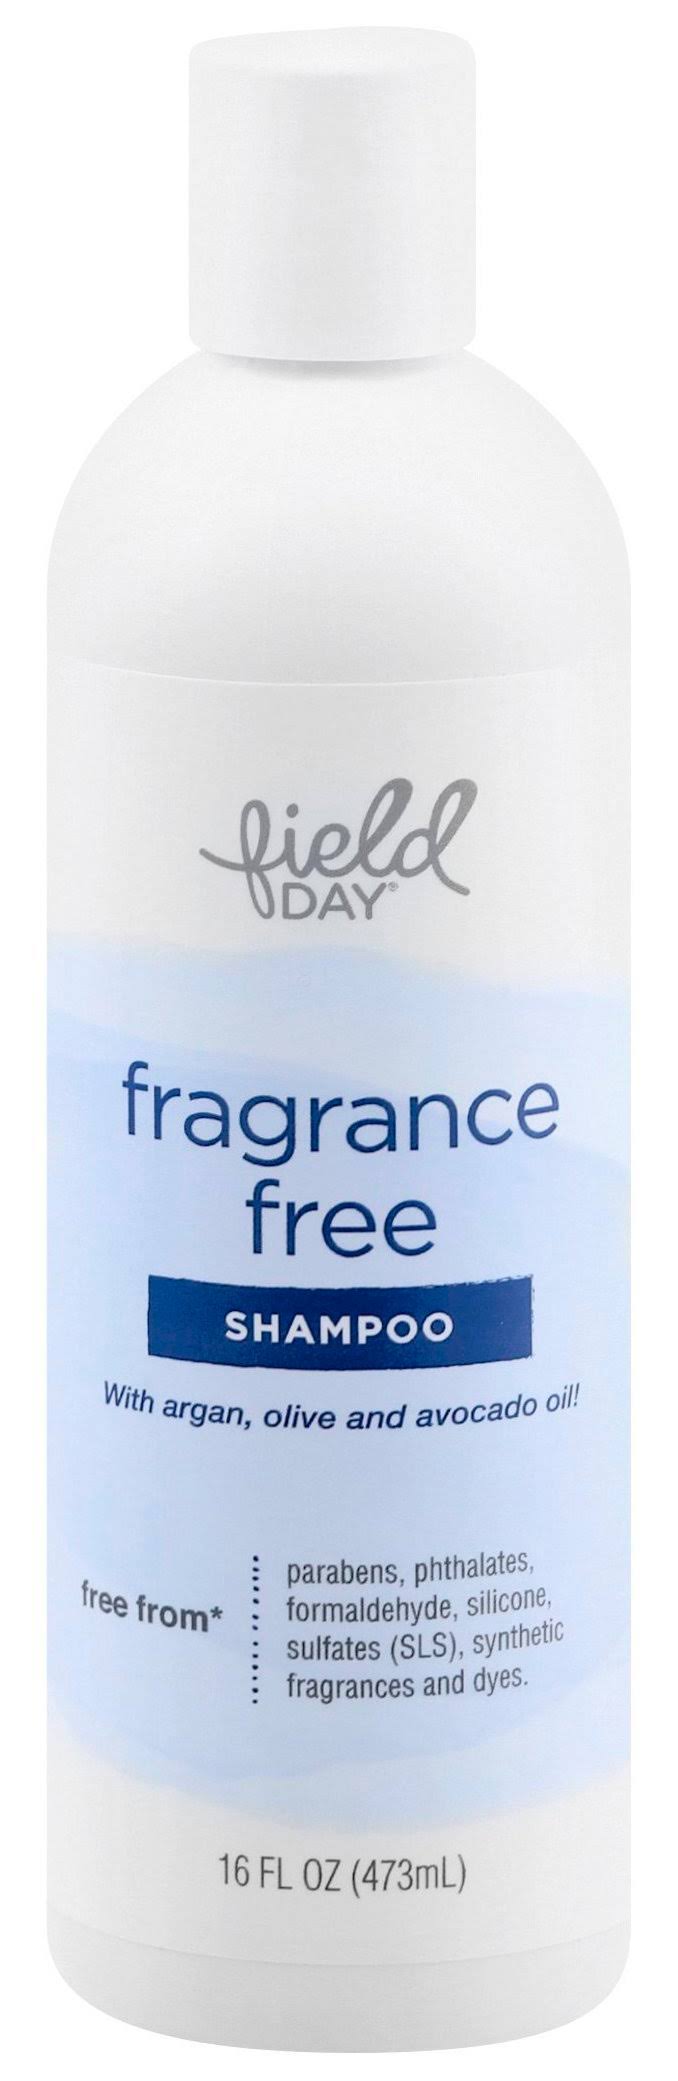 Field Day Fragrance Free Shampoo, 16 Fluid Ounce - 6 per case.